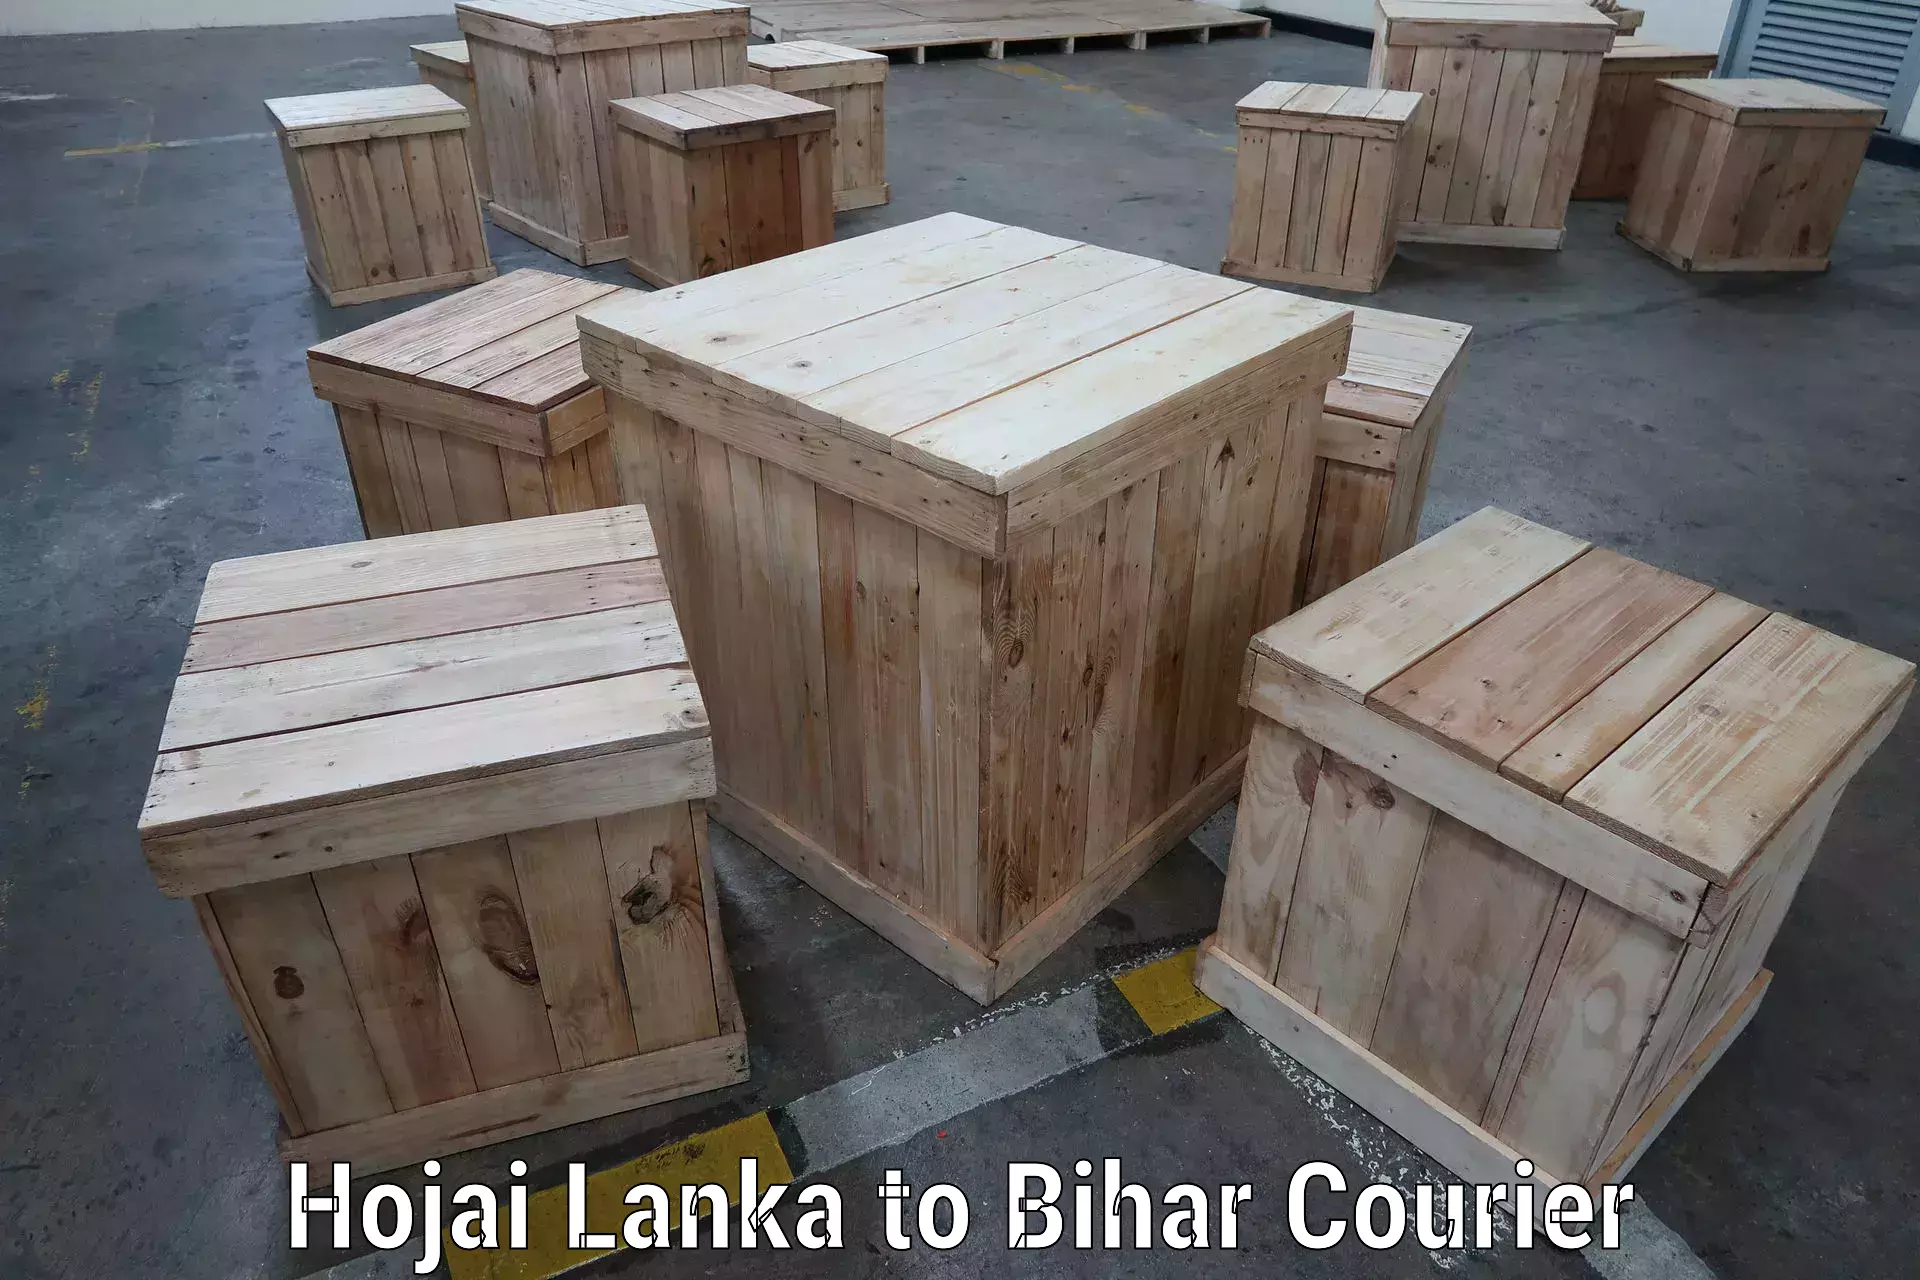 Courier service comparison Hojai Lanka to Bettiah